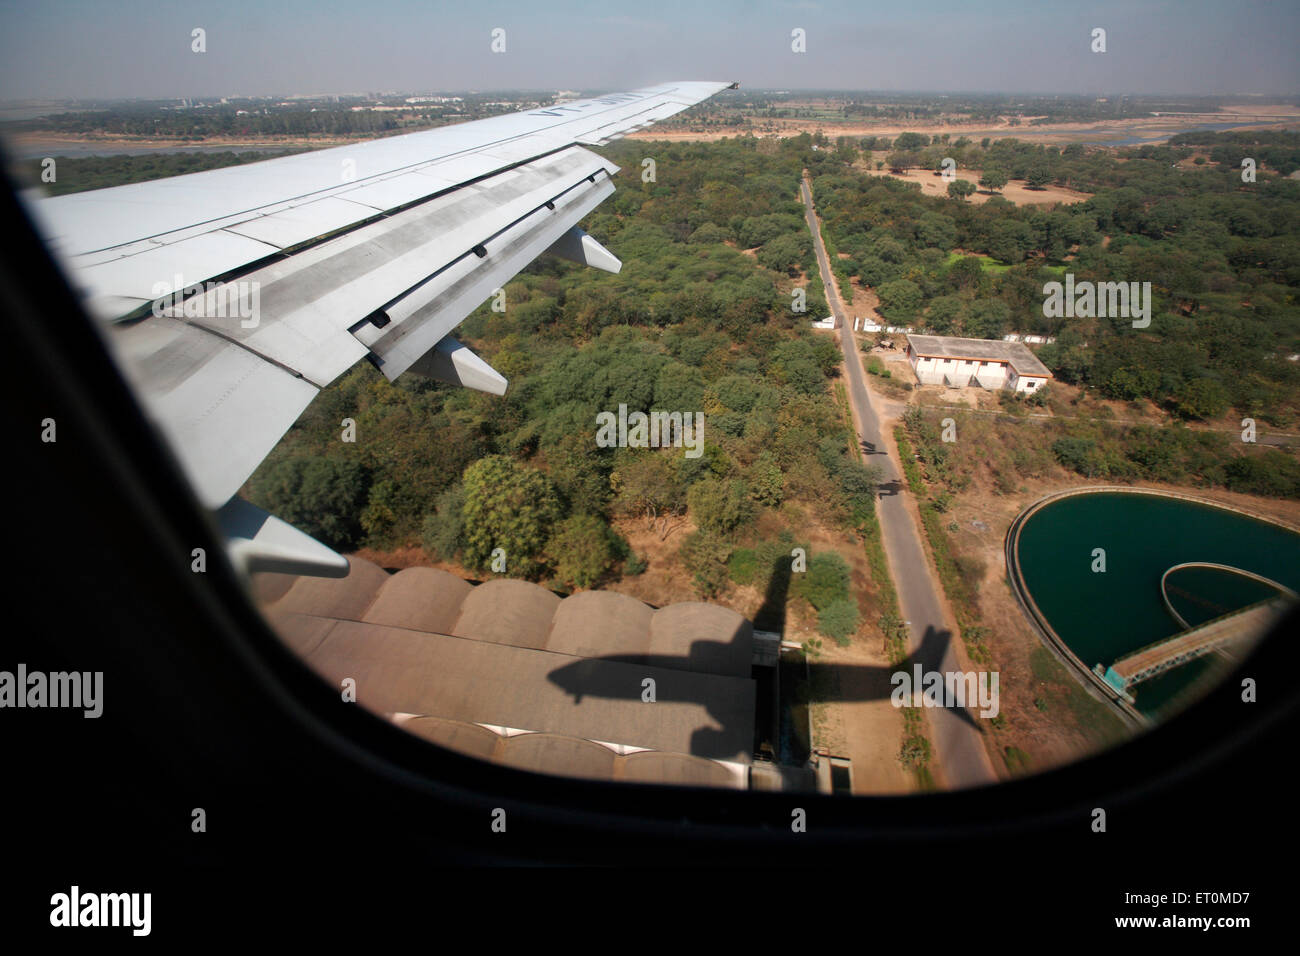 Aile d'avion, aile d'avion, aile d'avion, vol au-dessus de la ville, Ahmedabad, Gujarat, Inde, avion indien Banque D'Images